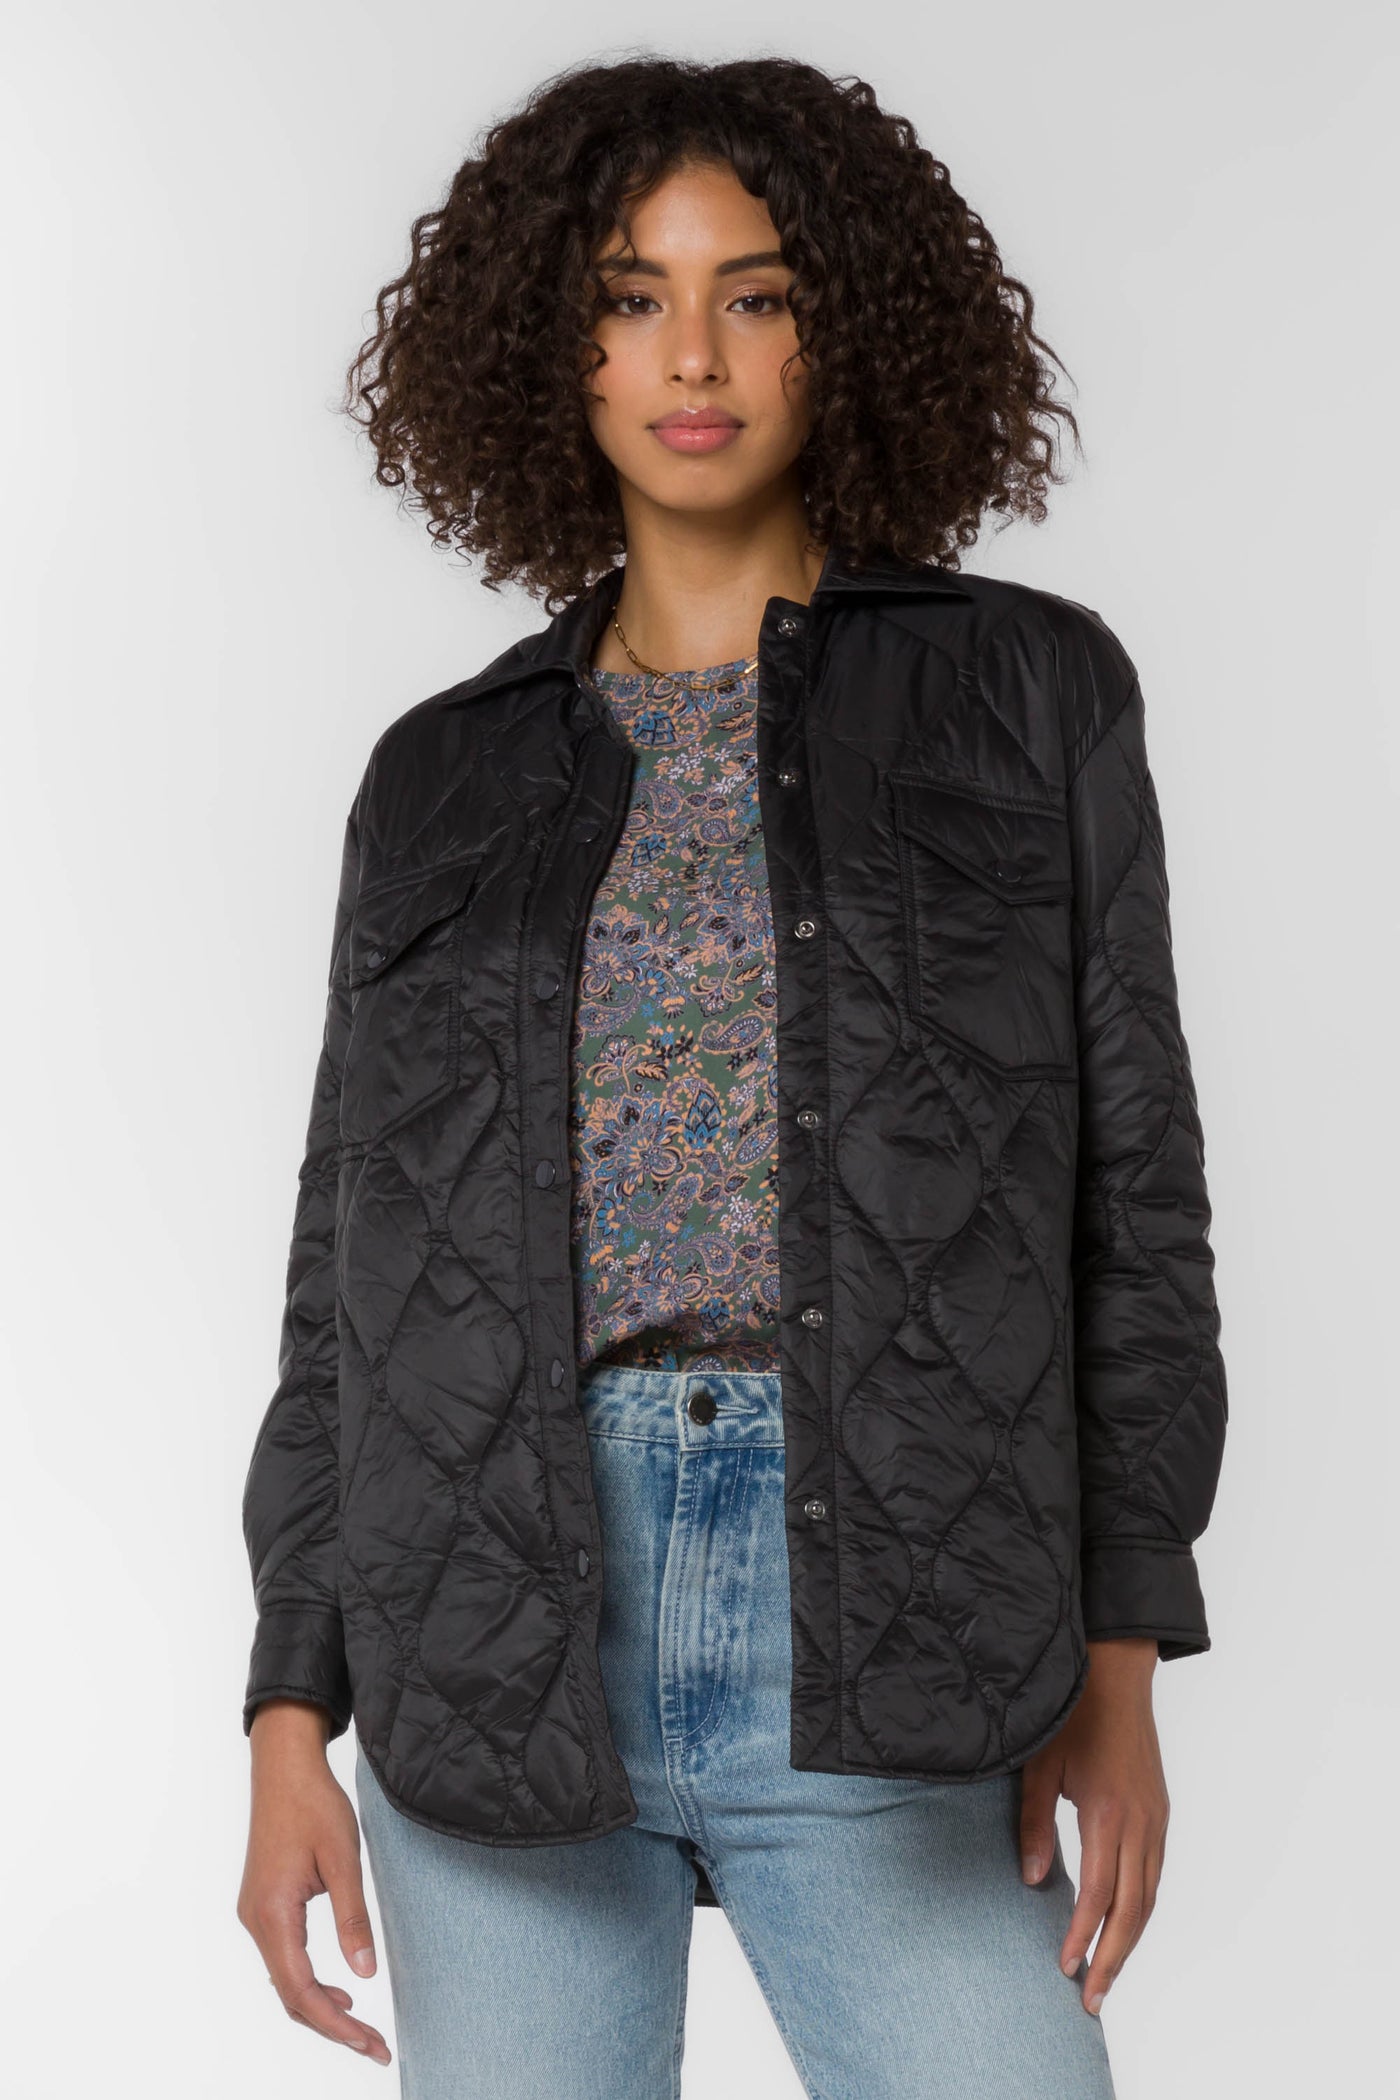 Eleanor Black Jacket - Jackets & Outerwear - Velvet Heart Clothing